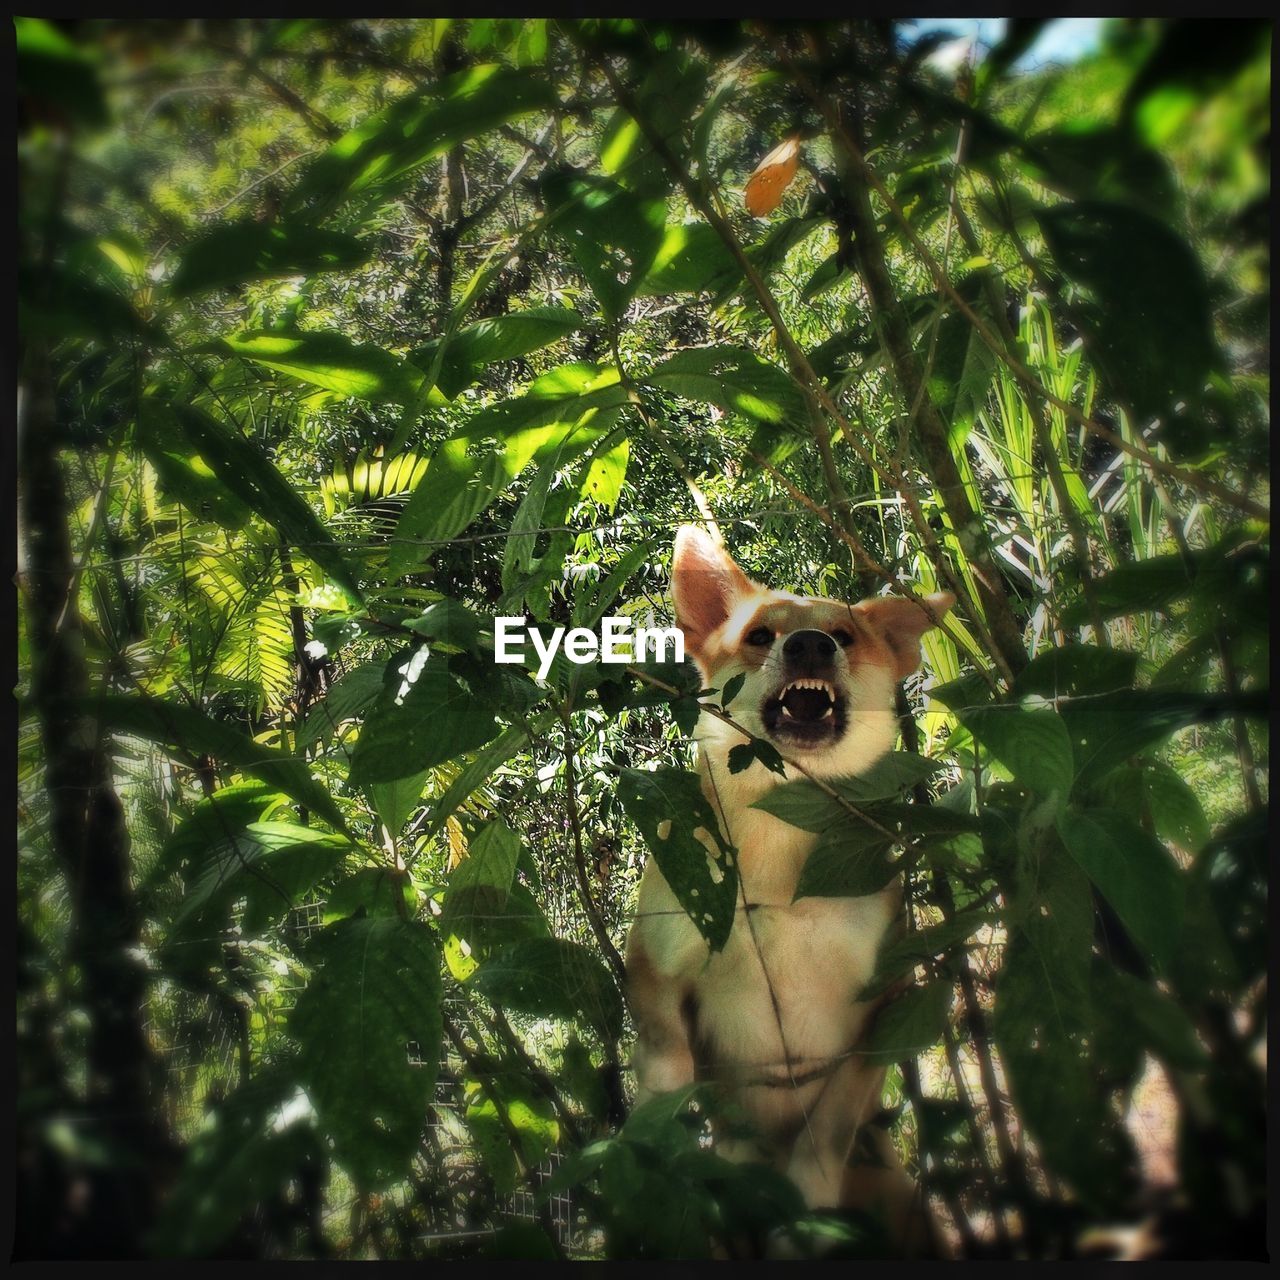 Dog in bushes